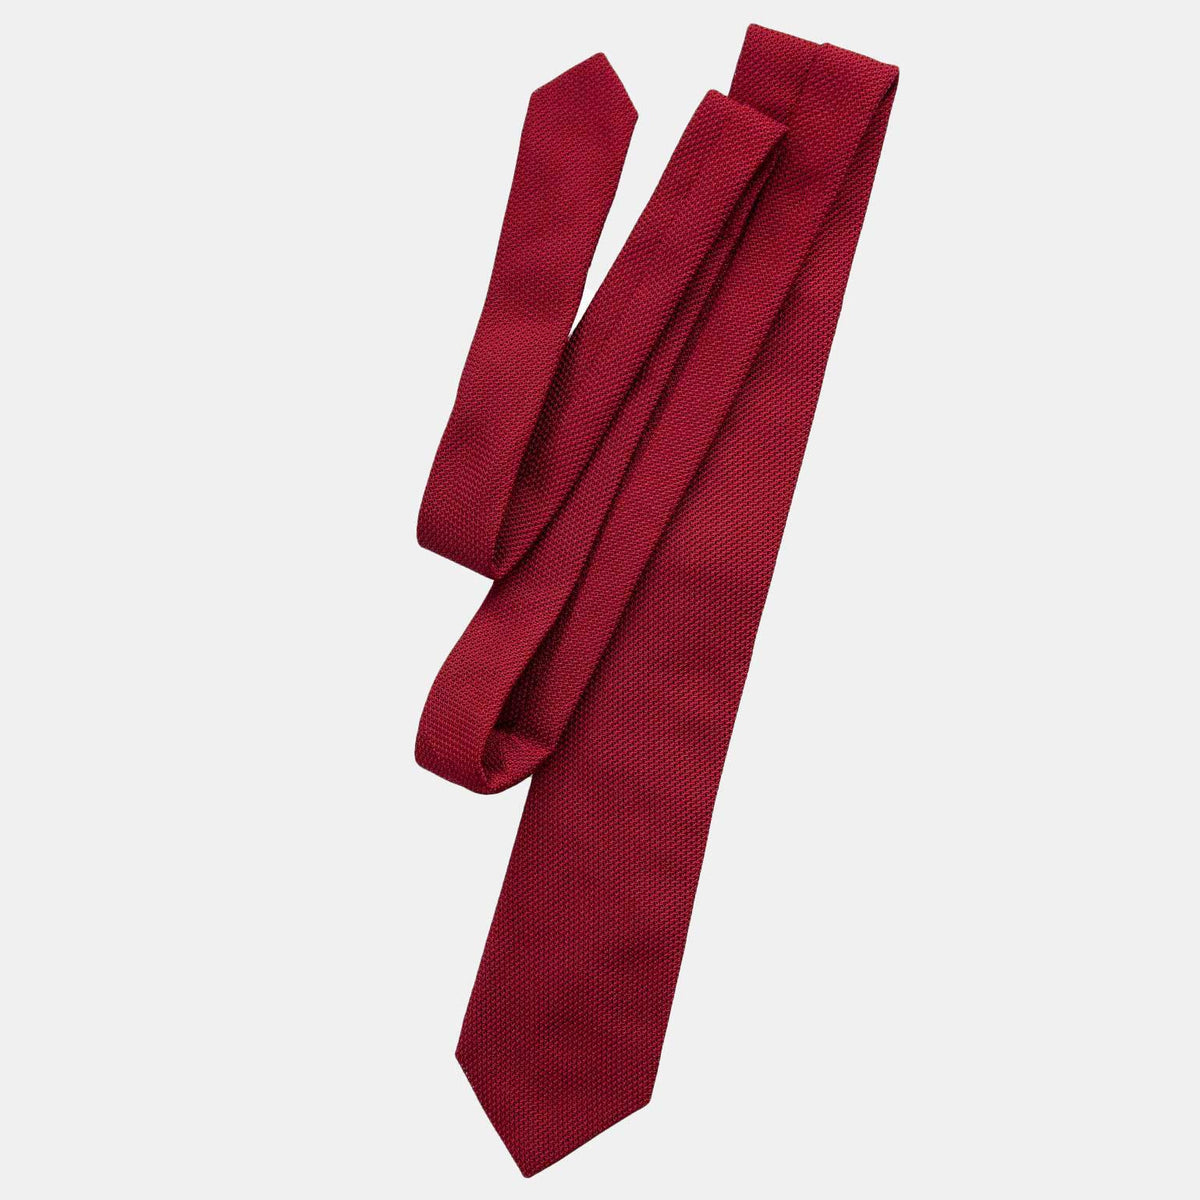 Luxury handmade Italian silk tie